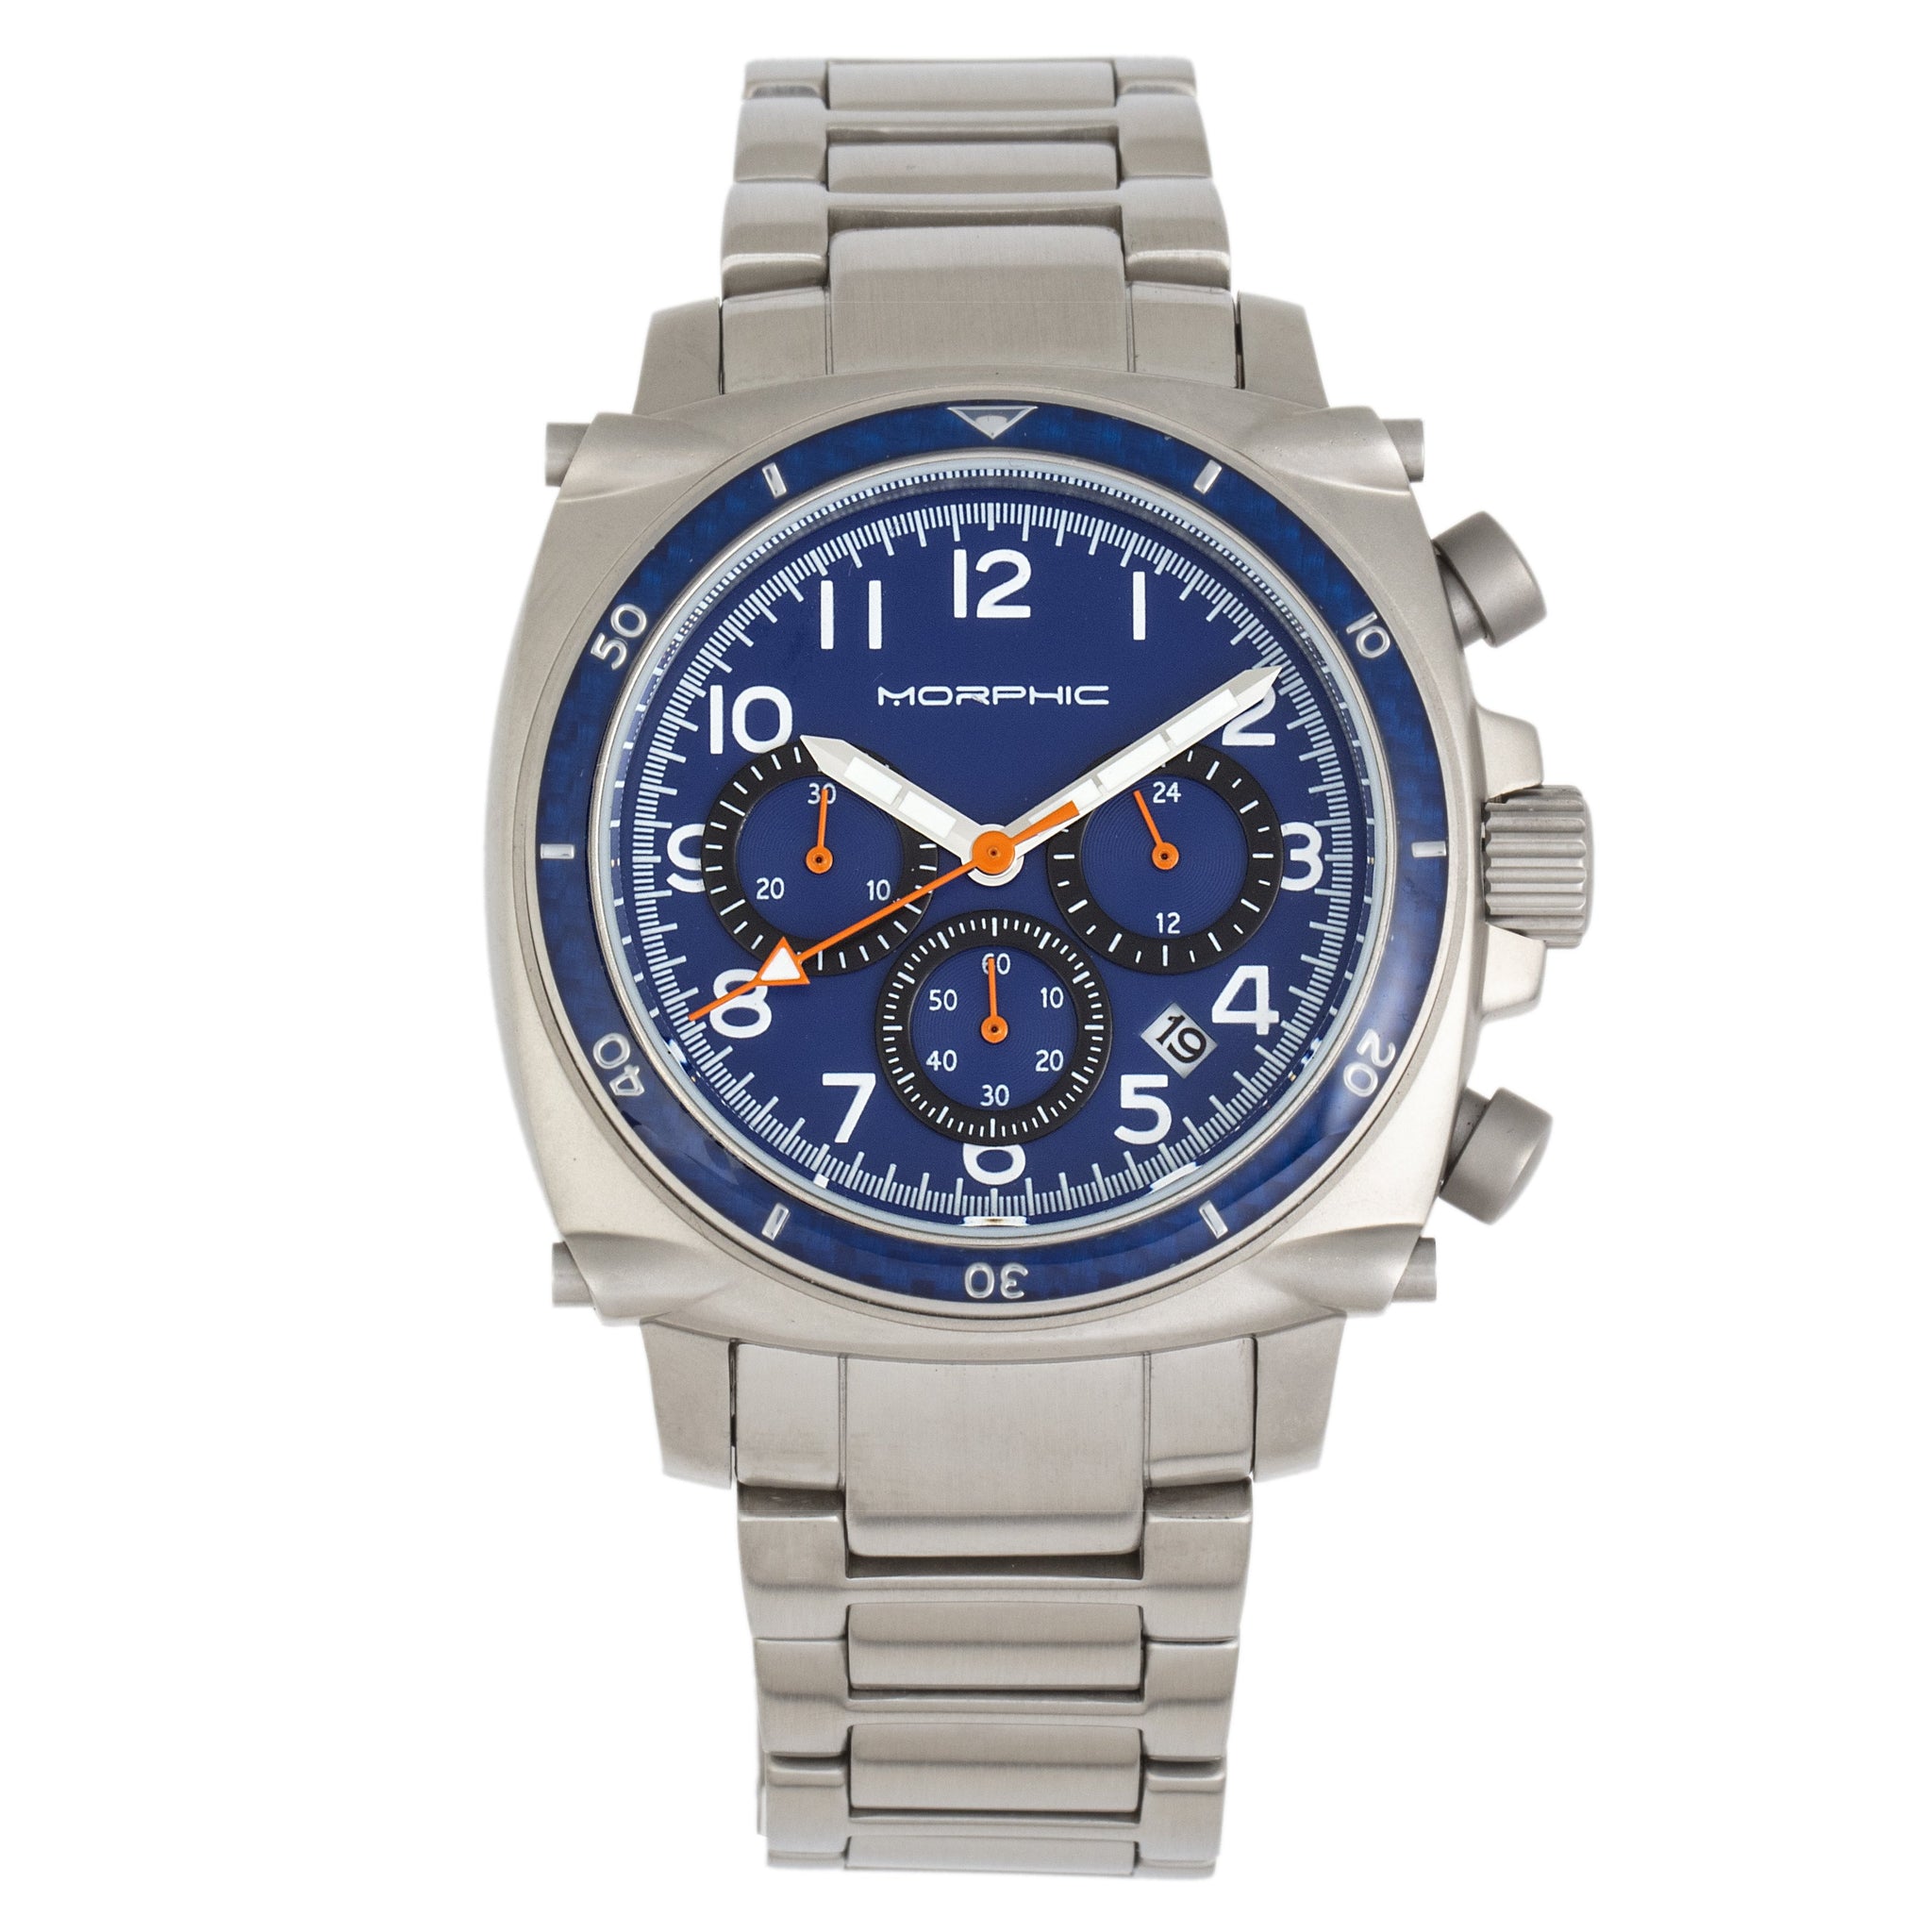 Morphic M83 Series Chronograph Bracelet Watch w/ Date - Silver/Blue - MPH8302